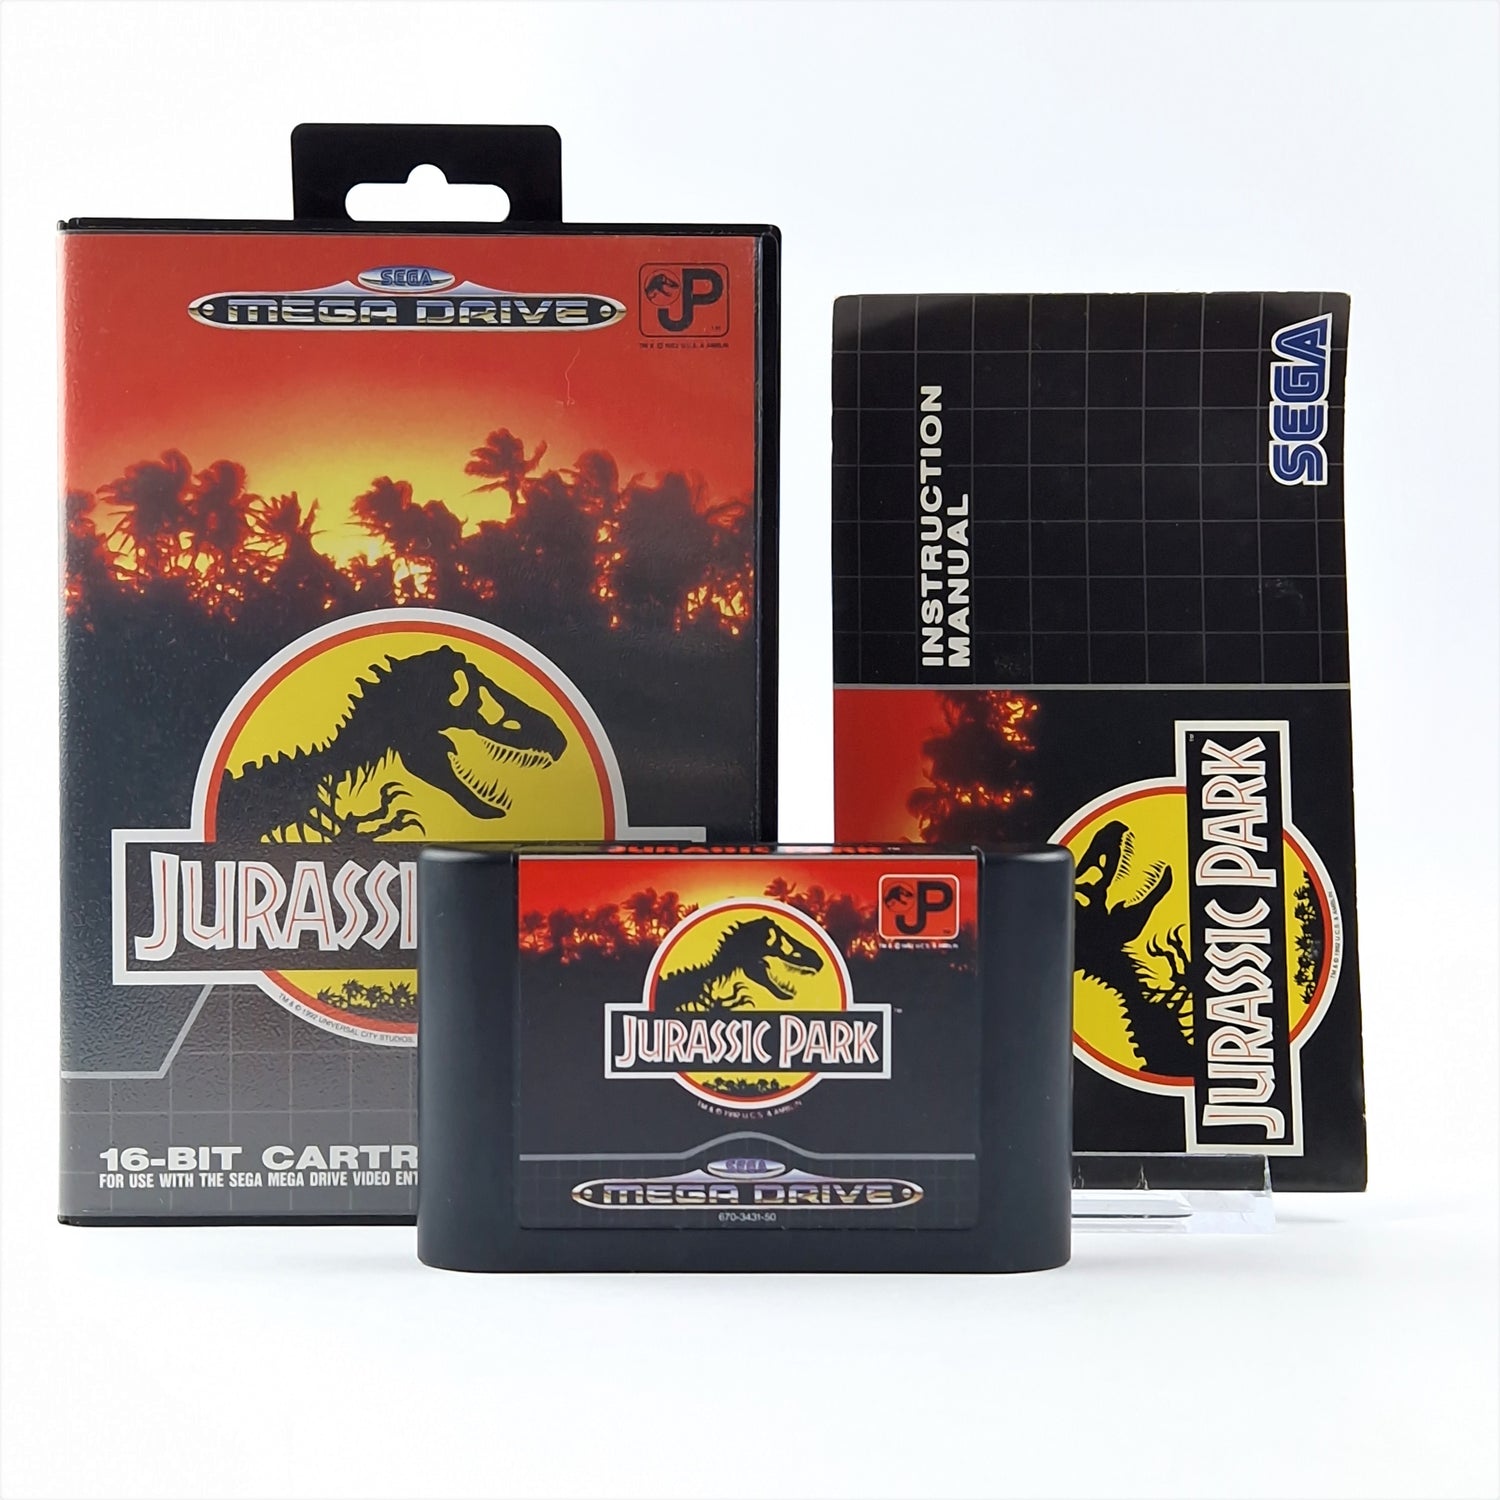 Sega Mega Drive Game: Jurassic Park - OVP Instructions Module | 16-bit cartridge